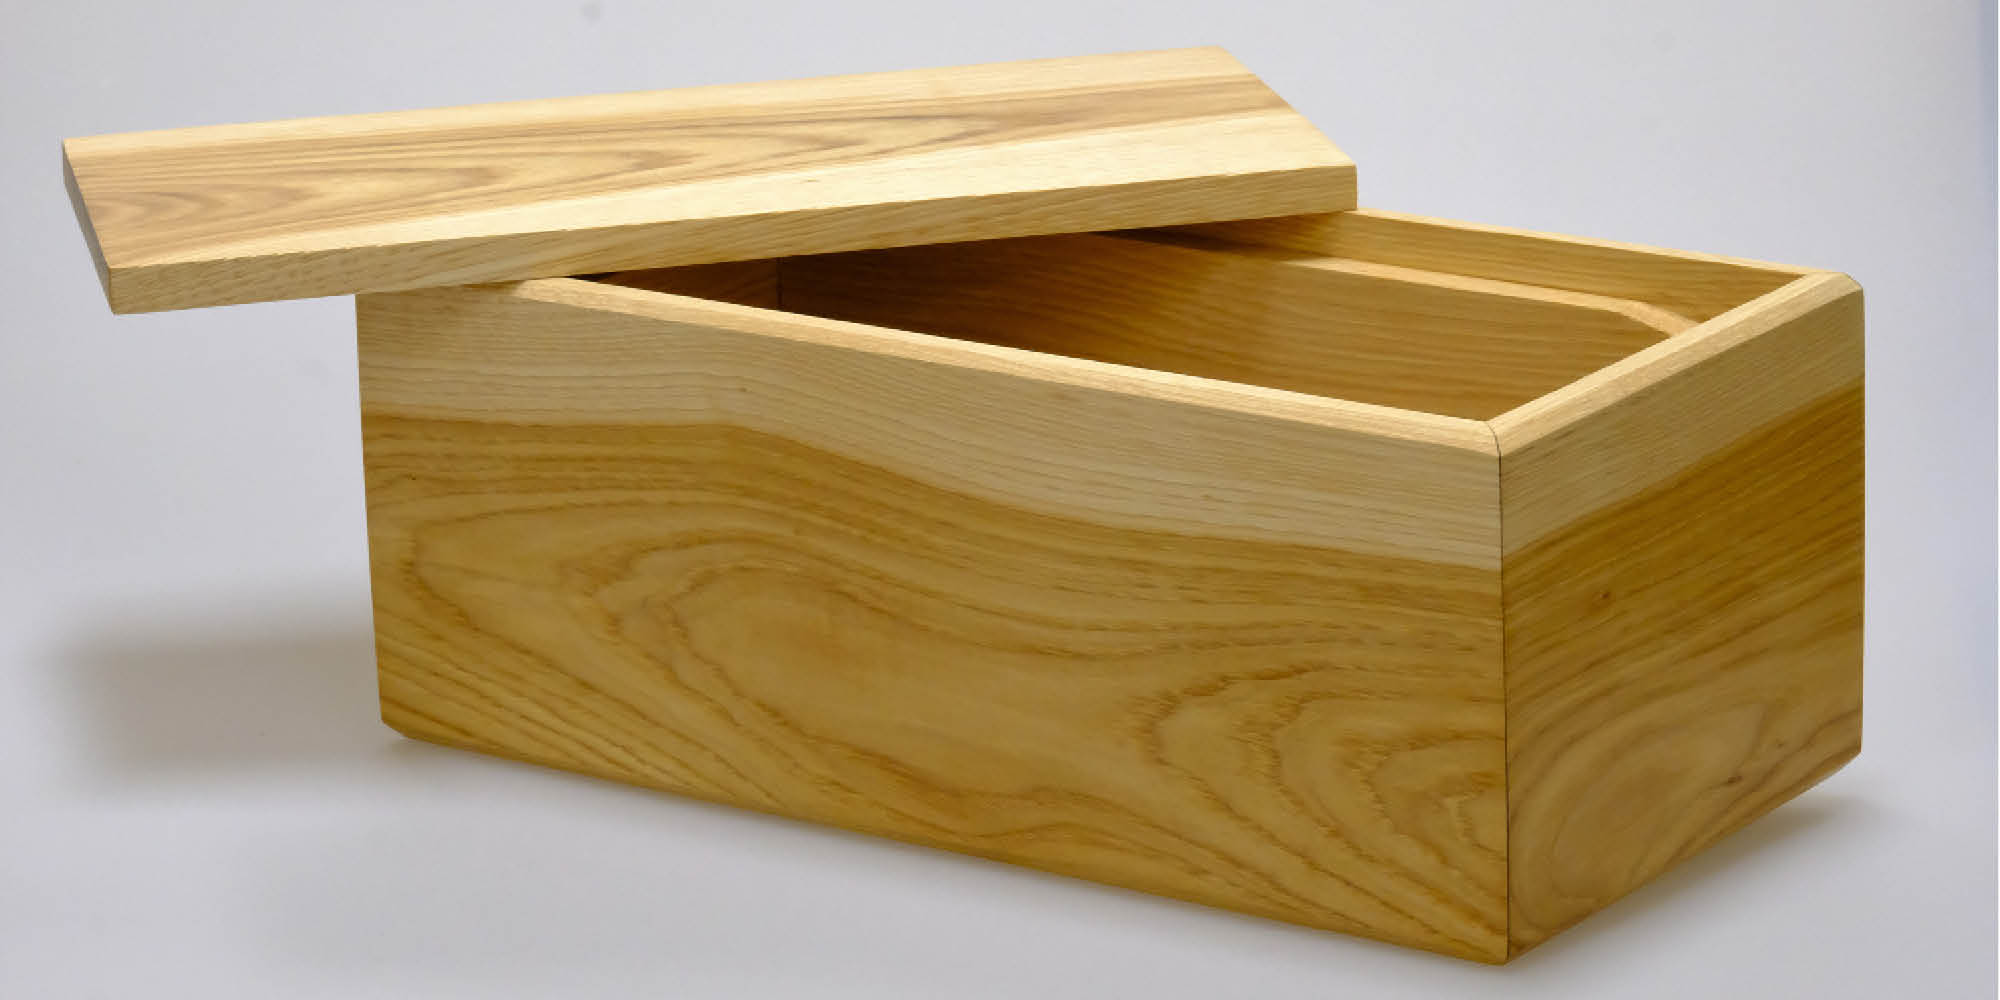 Intro to Fine Woodworking Hidden Compartment Keepsake Box Class - April